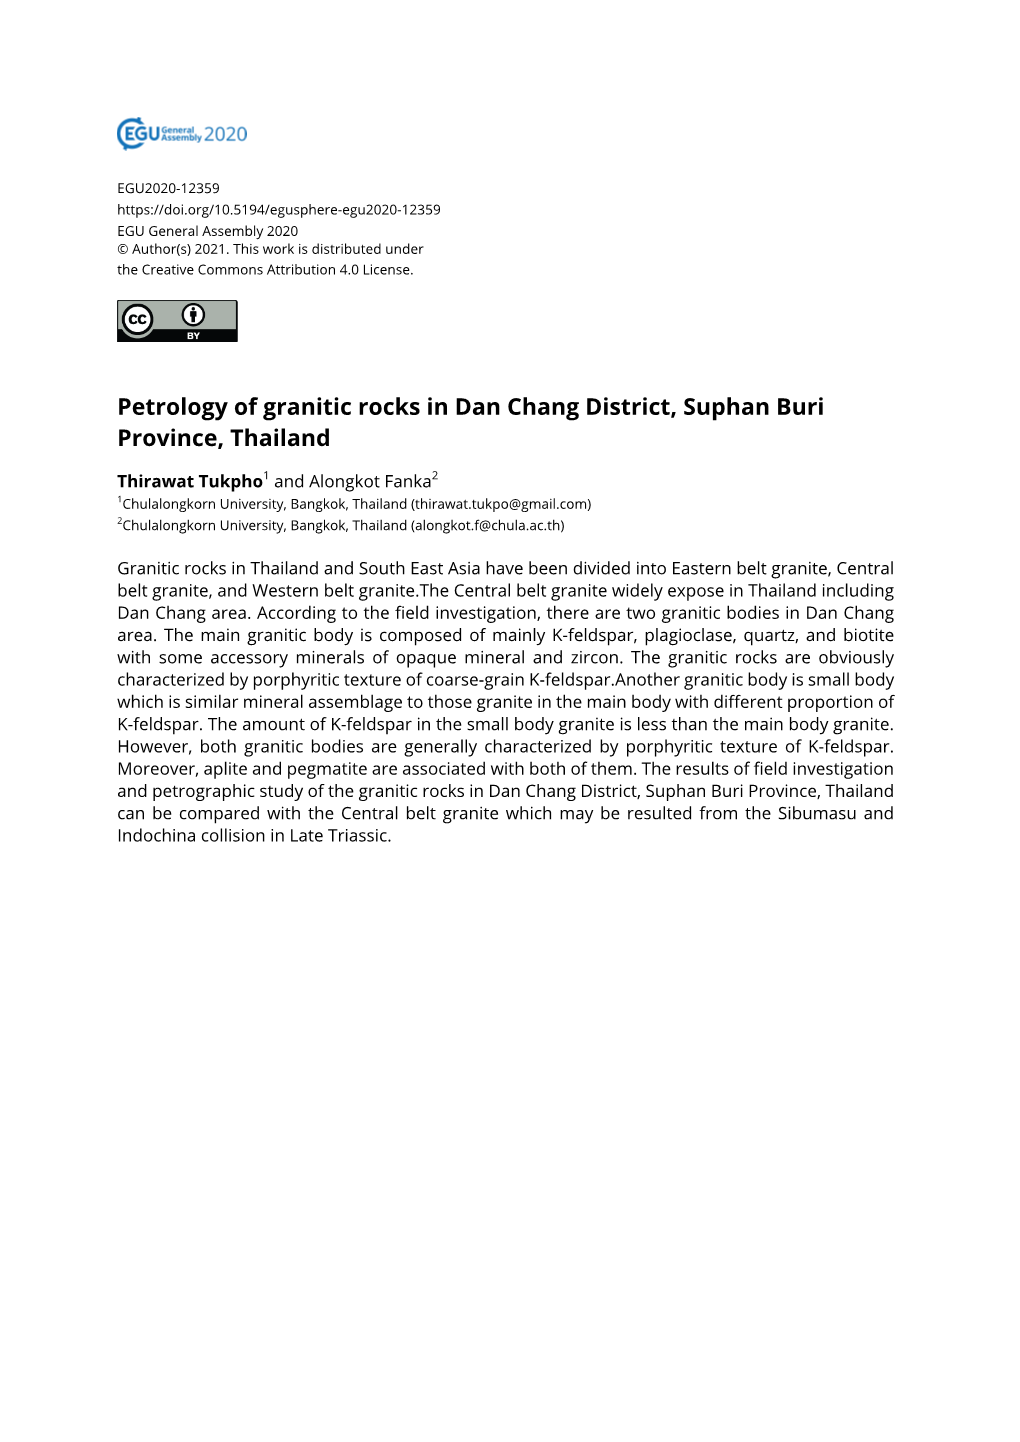 Petrology of Granitic Rocks in Dan Chang District, Suphan Buri Province, Thailand